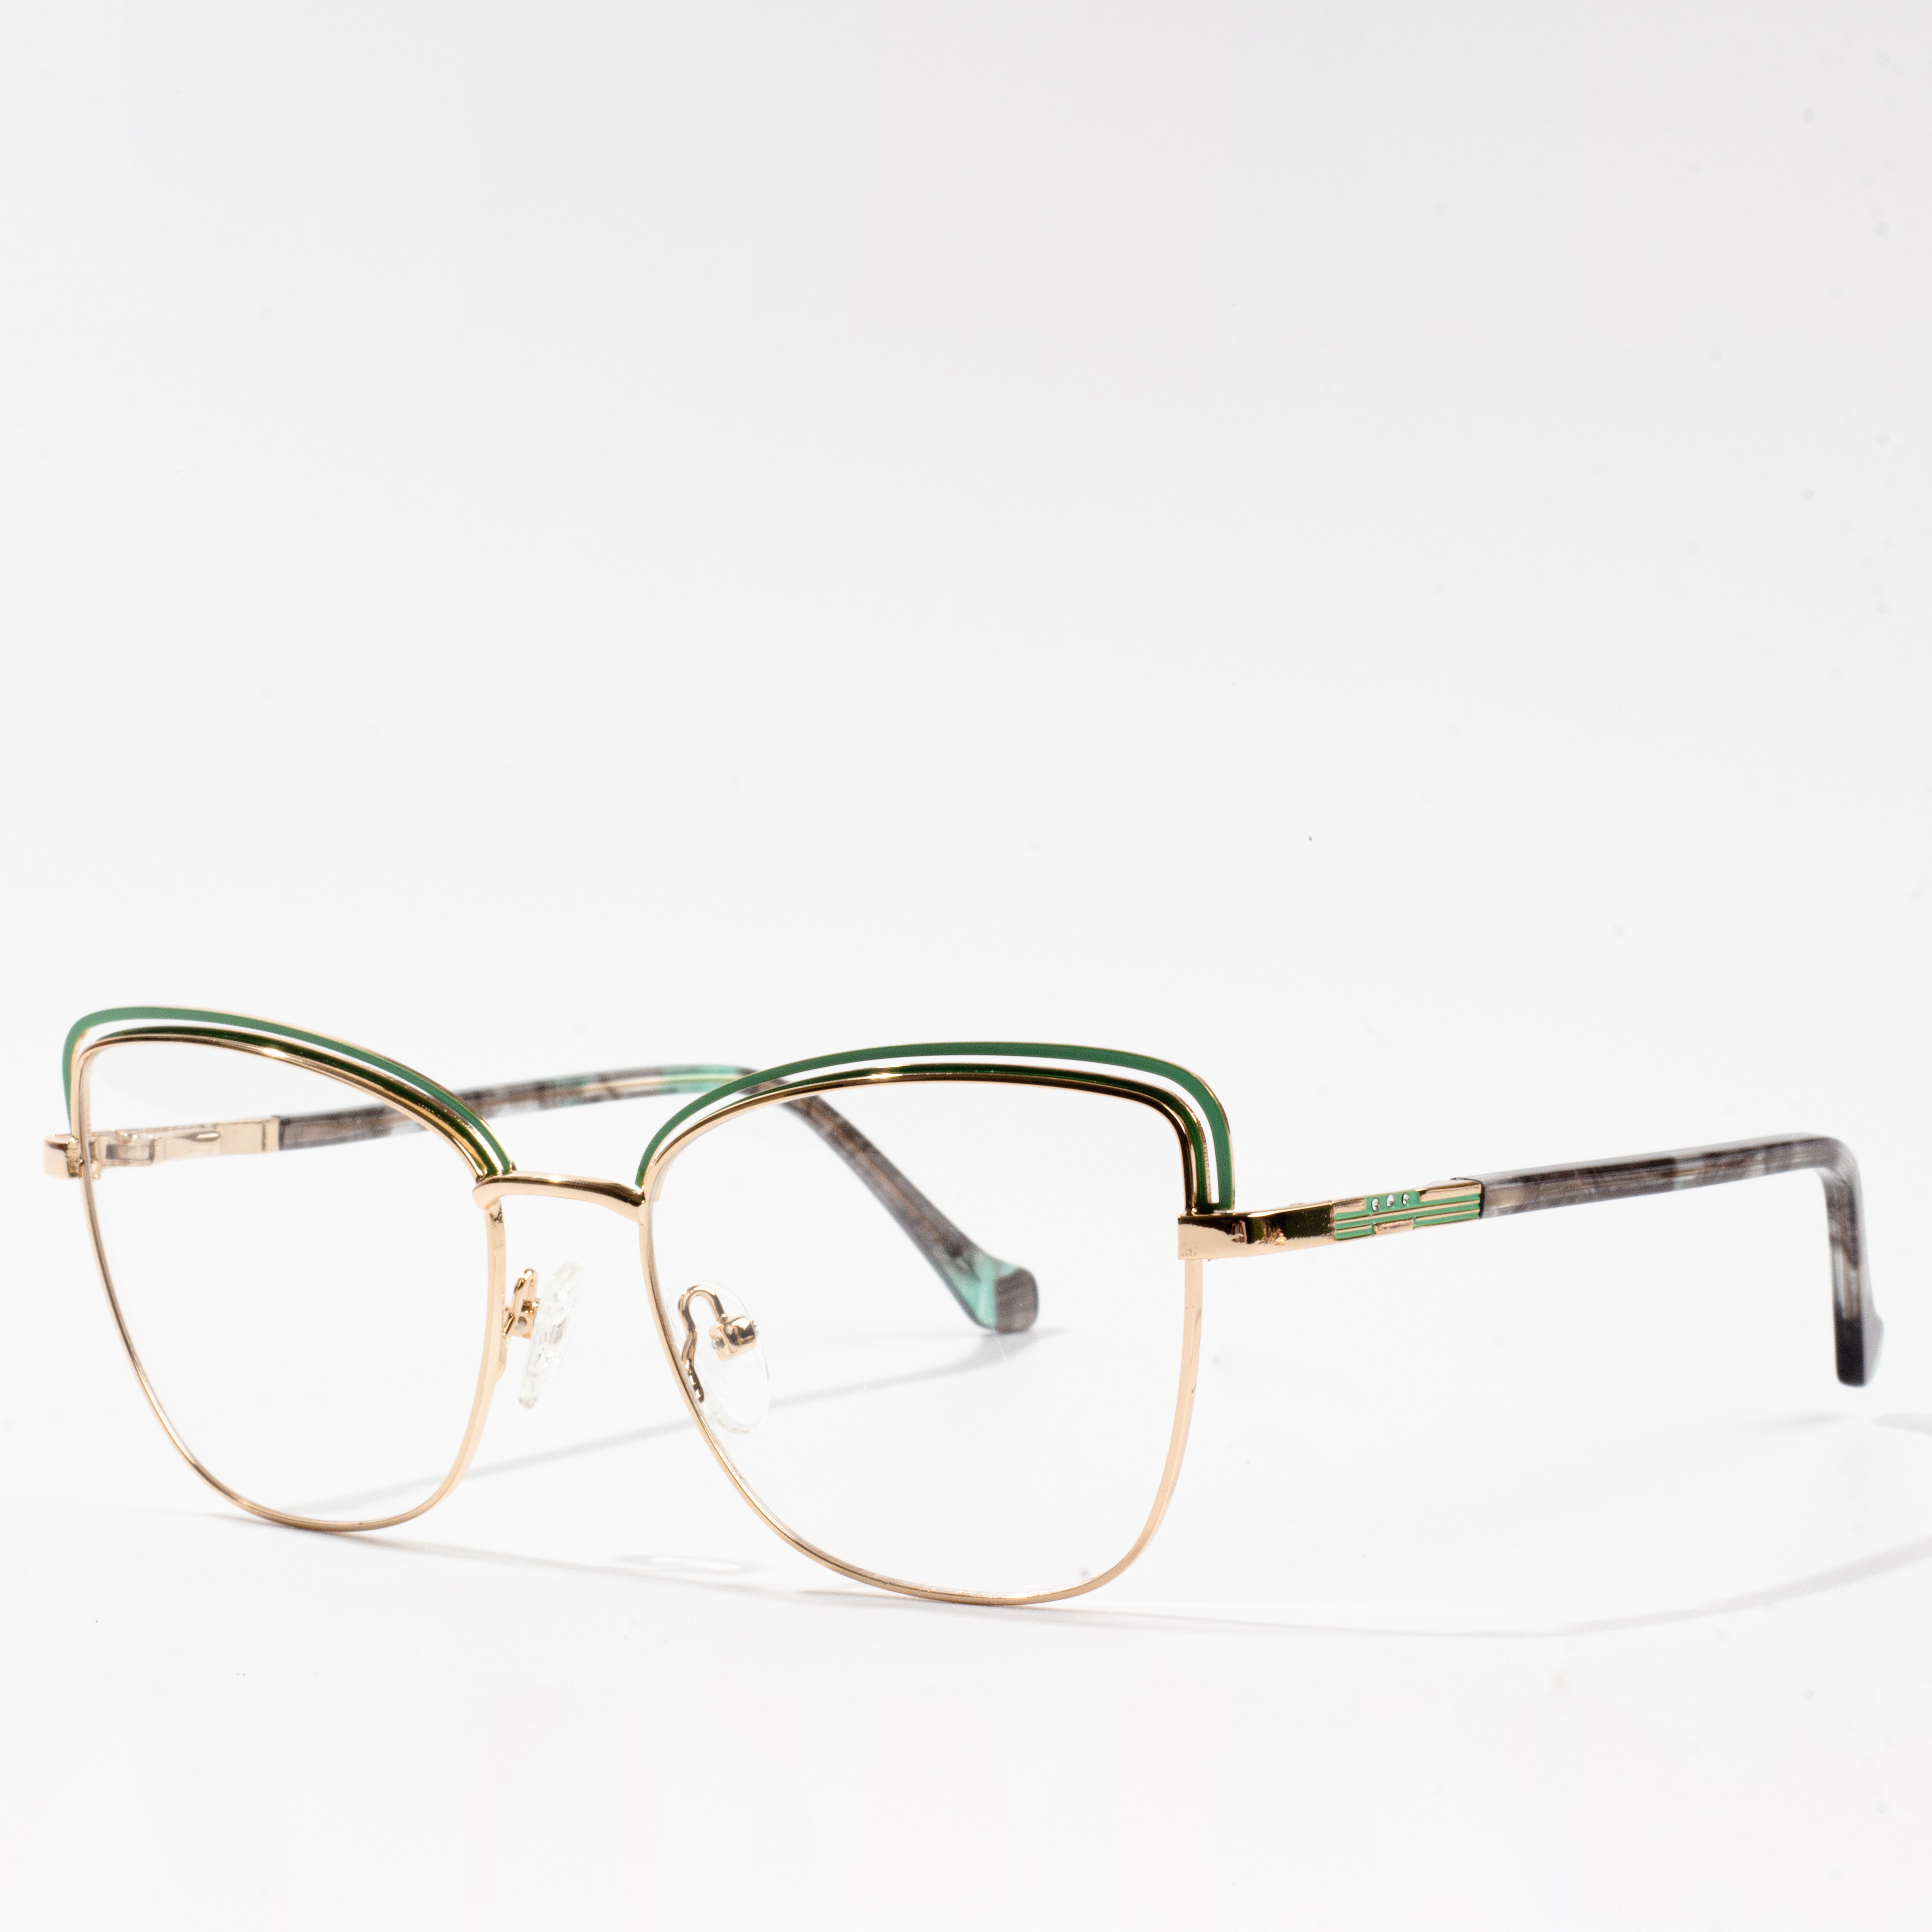 hoosing eyeglass frames